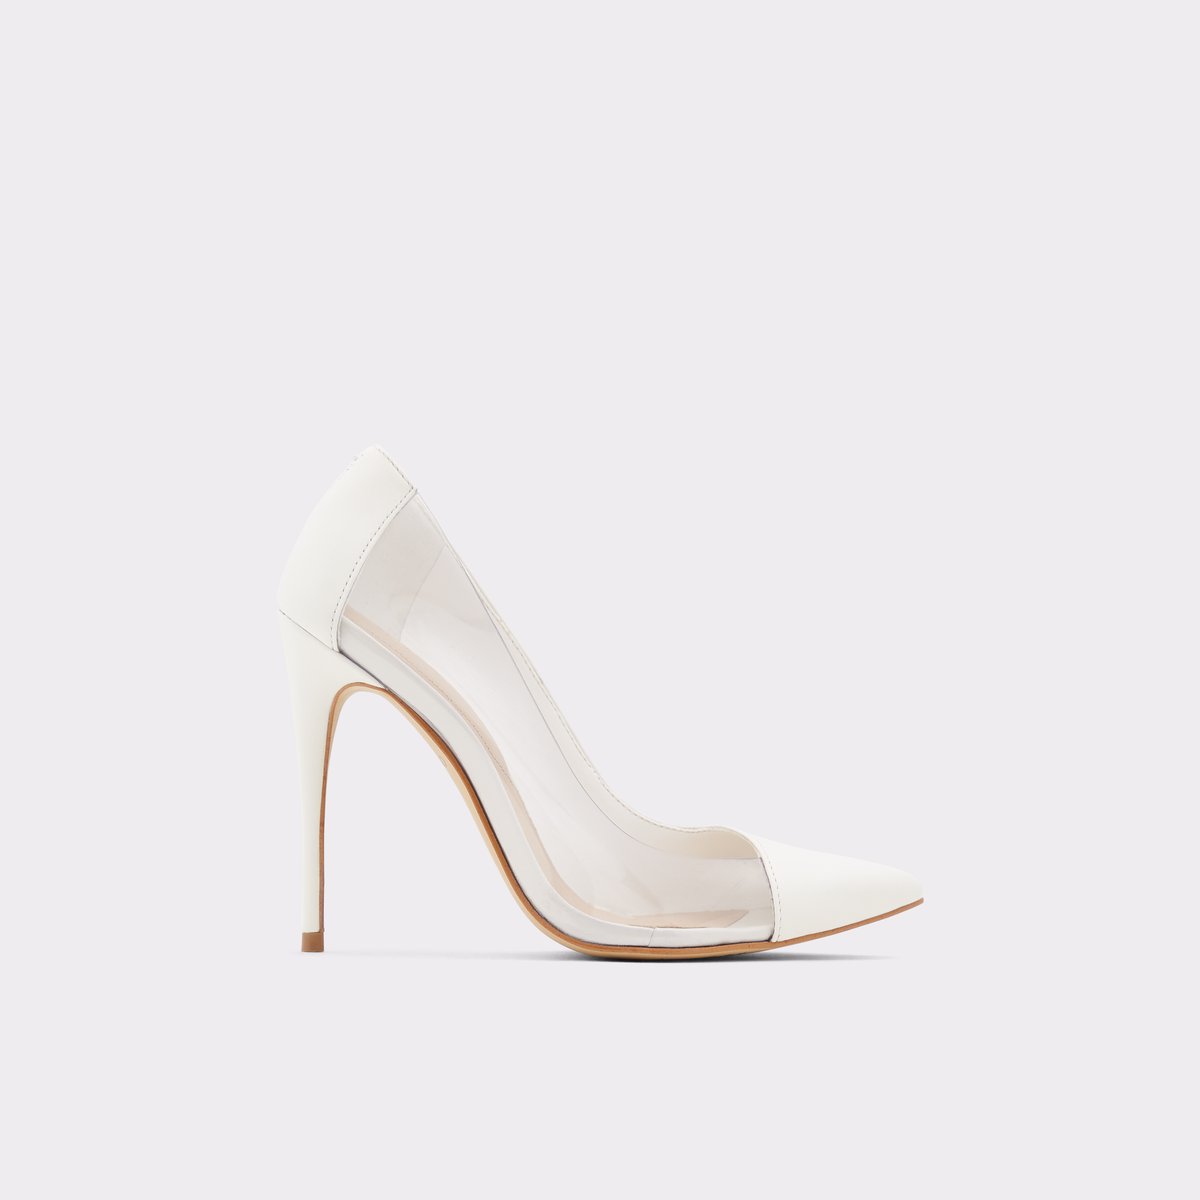 clear heels white